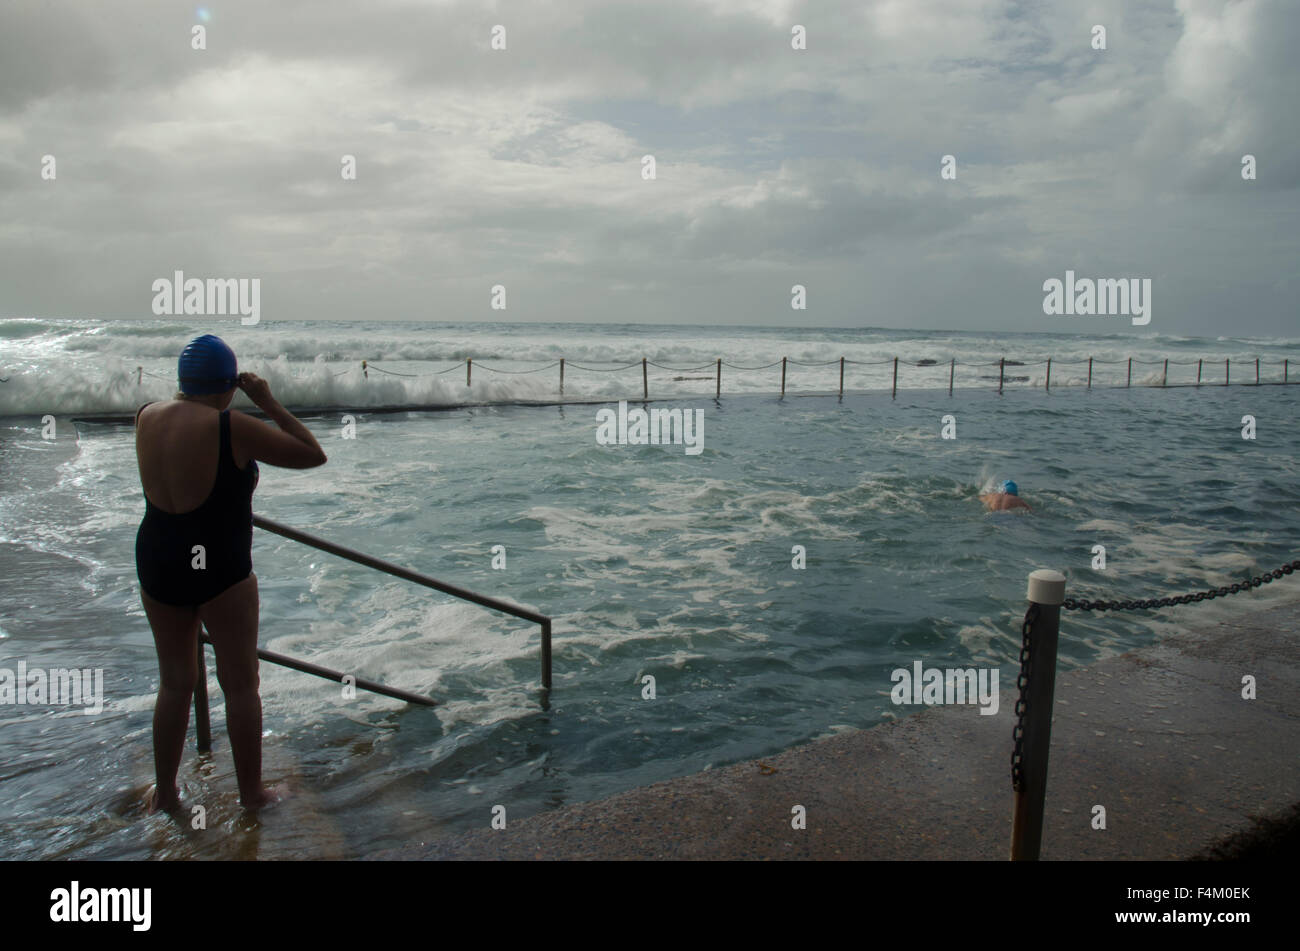 Older woman preparing to swim in rough sea conditions at Newport Beach ocean pool in Sydney, Australia Stock Photo